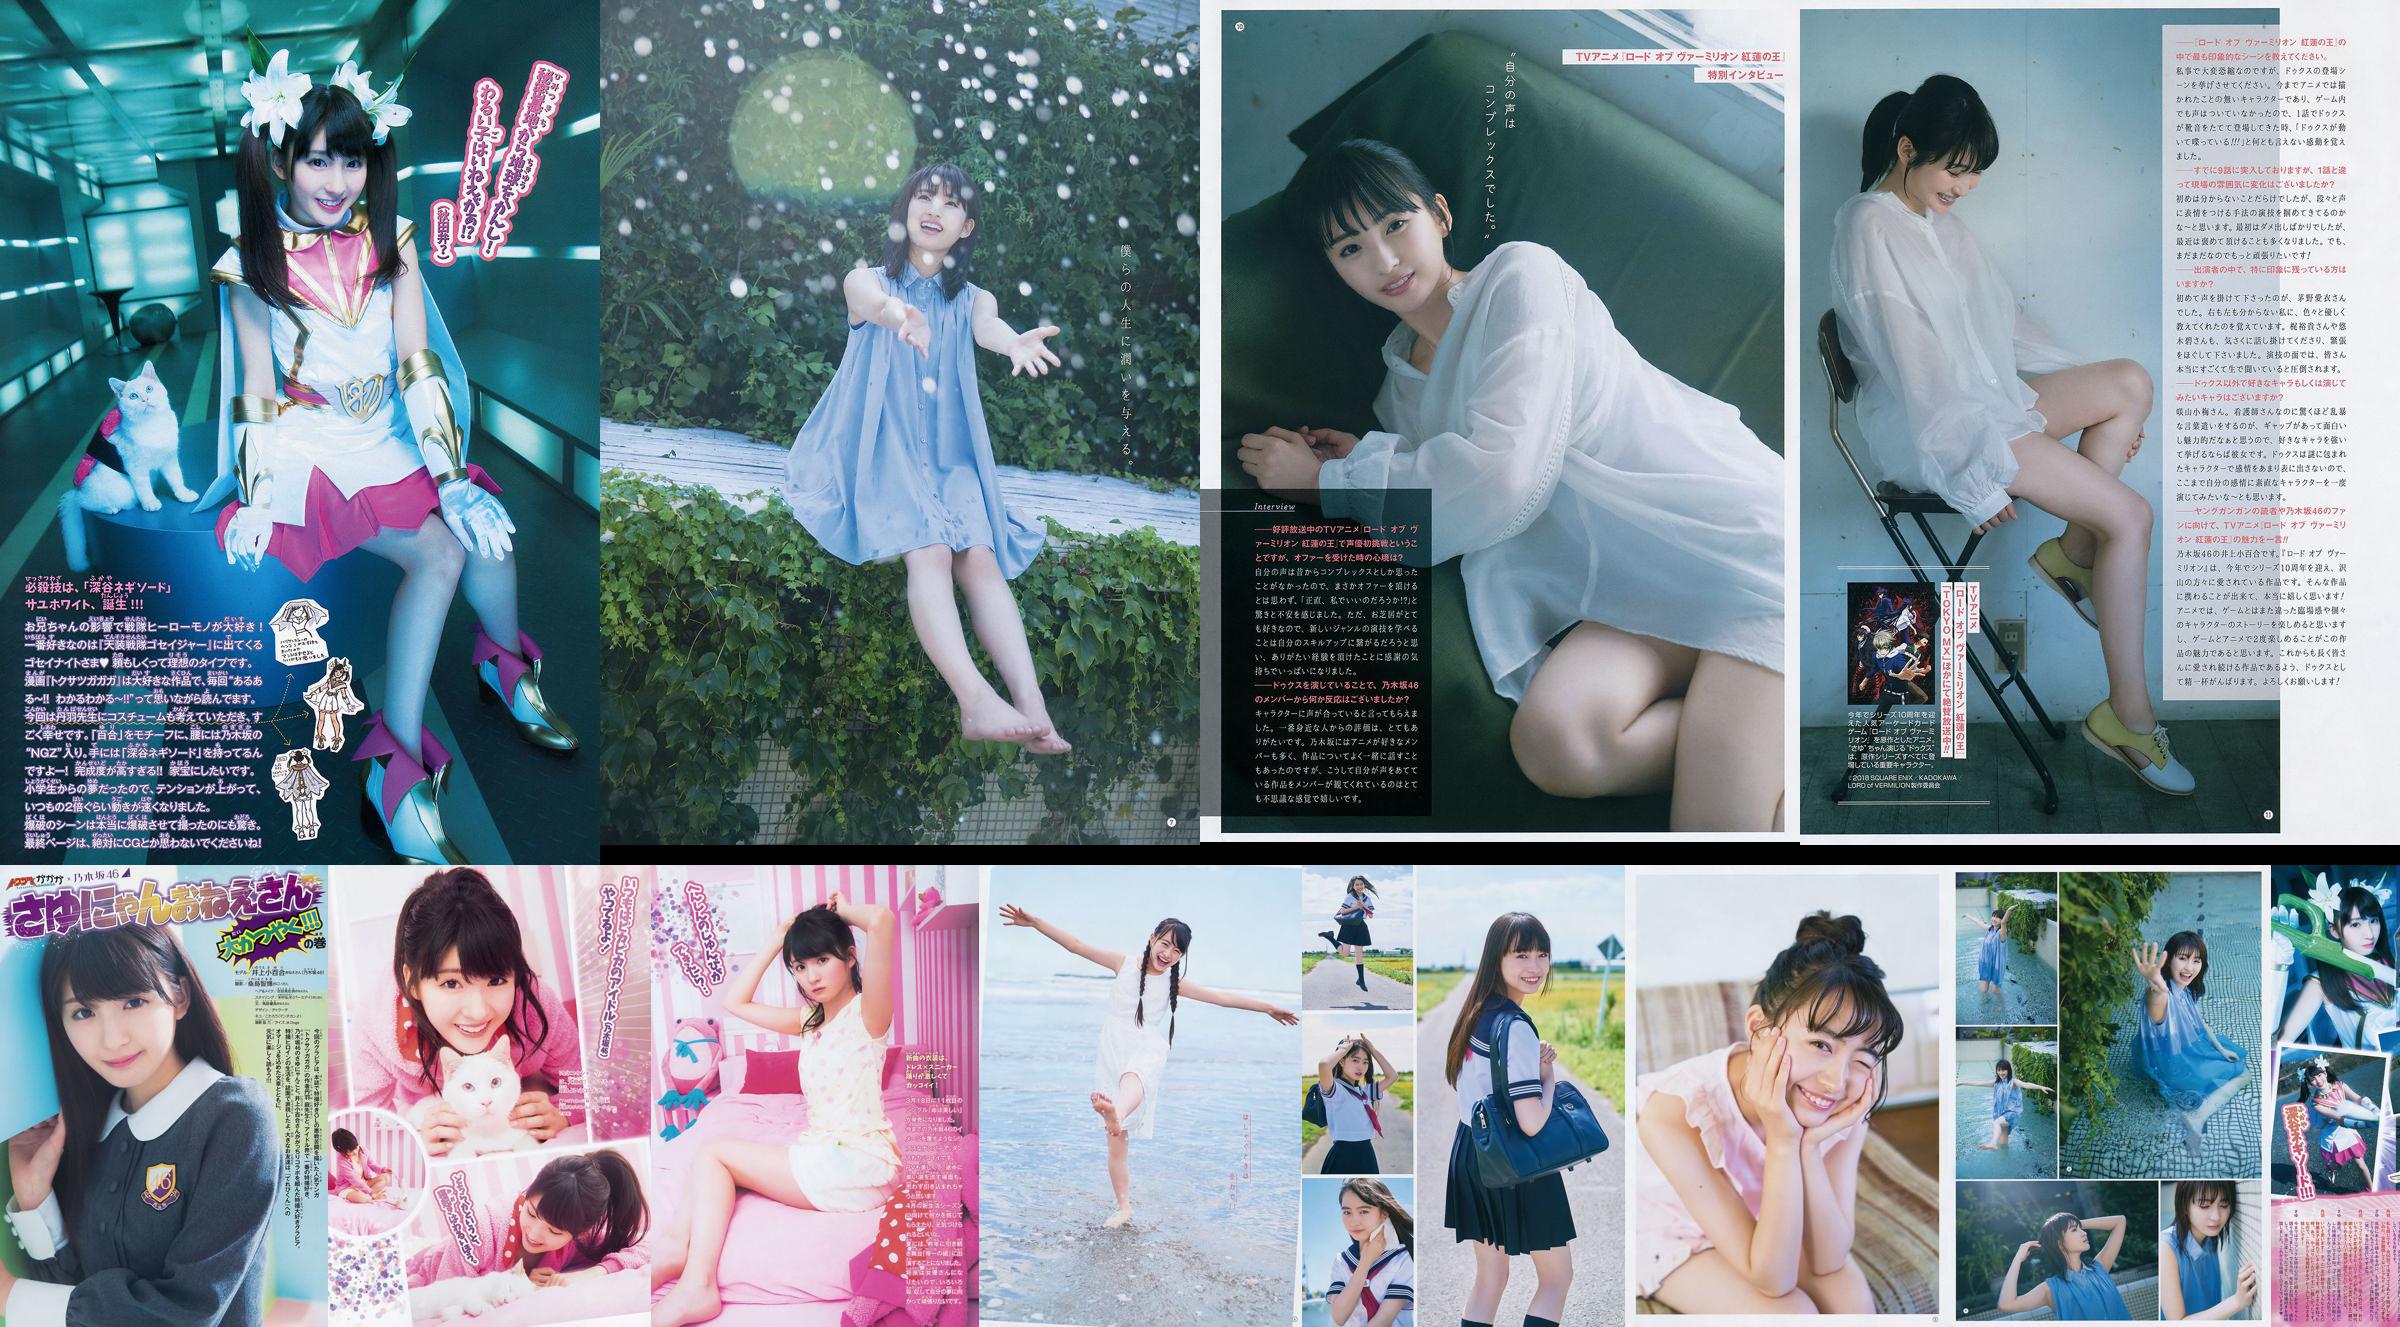 [Young Gangan] Sayuri Inoue Its original sand 2018 No.18 Photo Magazine No.d272cd Page 2